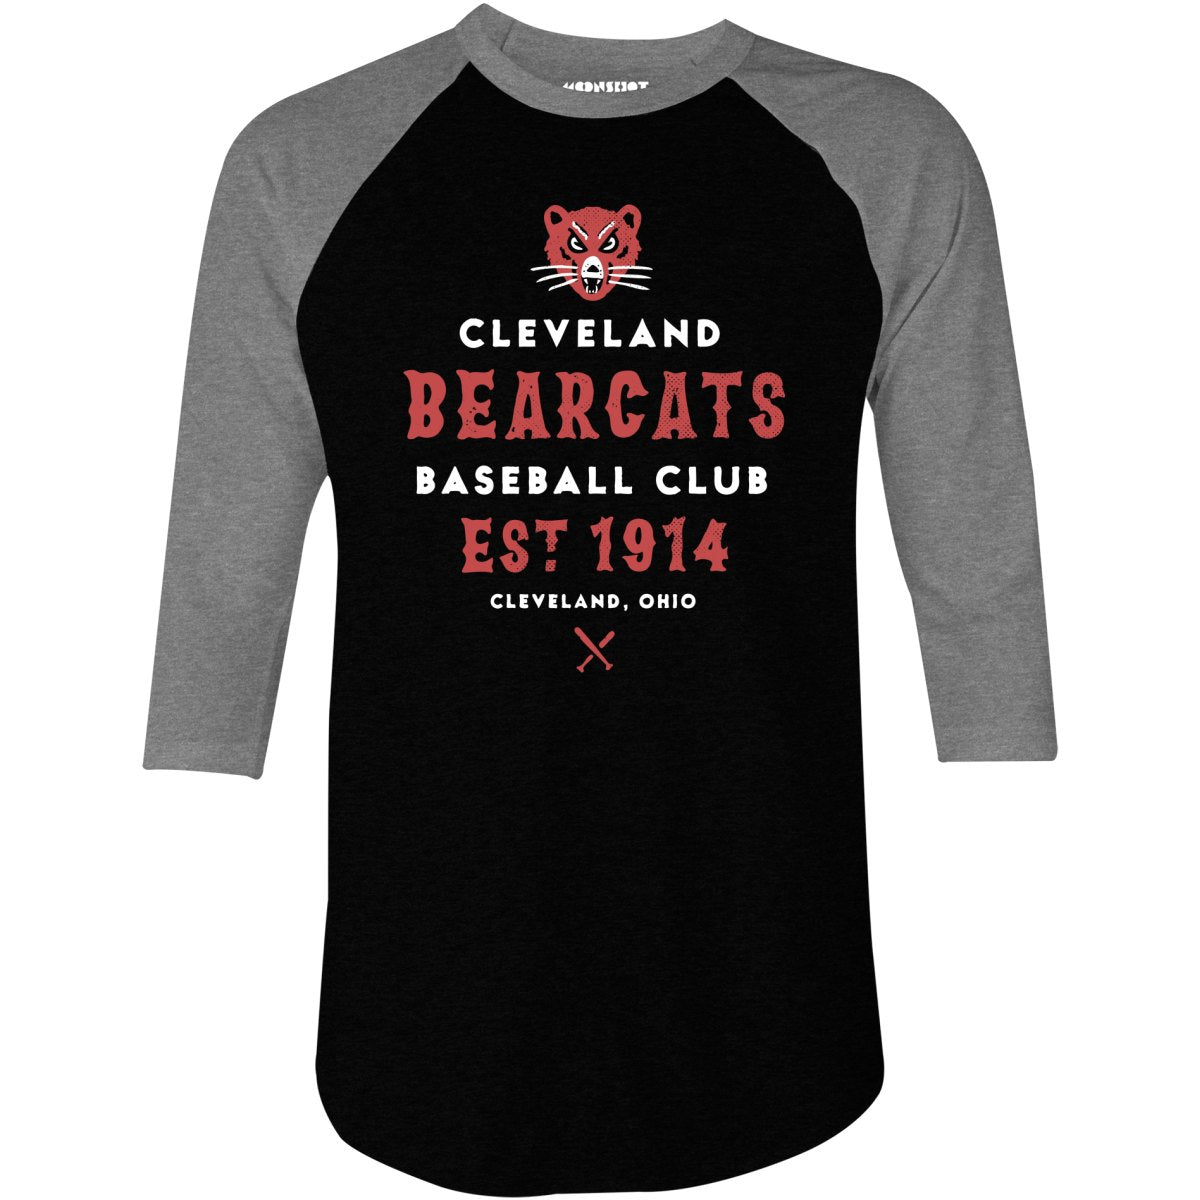 Cleveland Bearcats - Ohio - Vintage Defunct Baseball Teams - 3/4 Sleeve Raglan T-Shirt